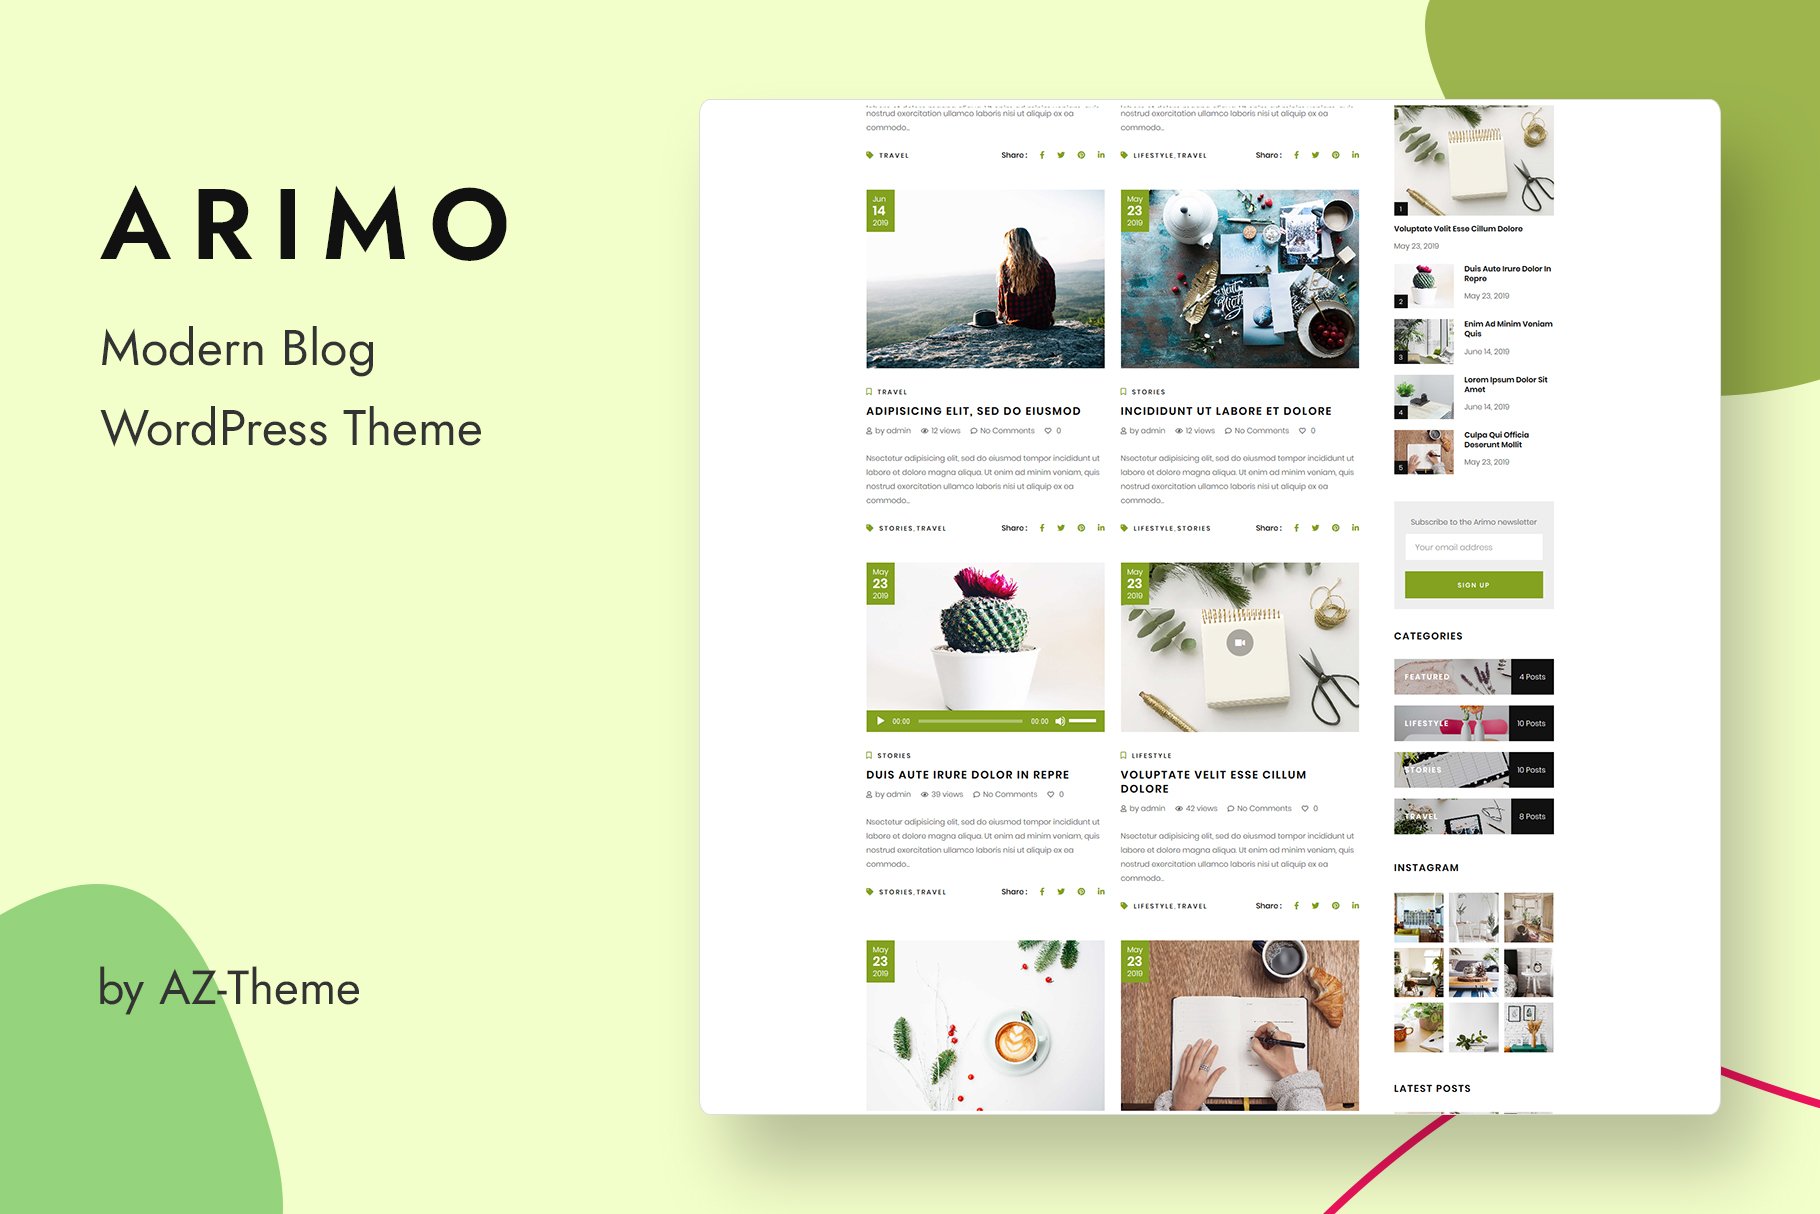 Modern Blog WordPress Theme - Arimo preview image.